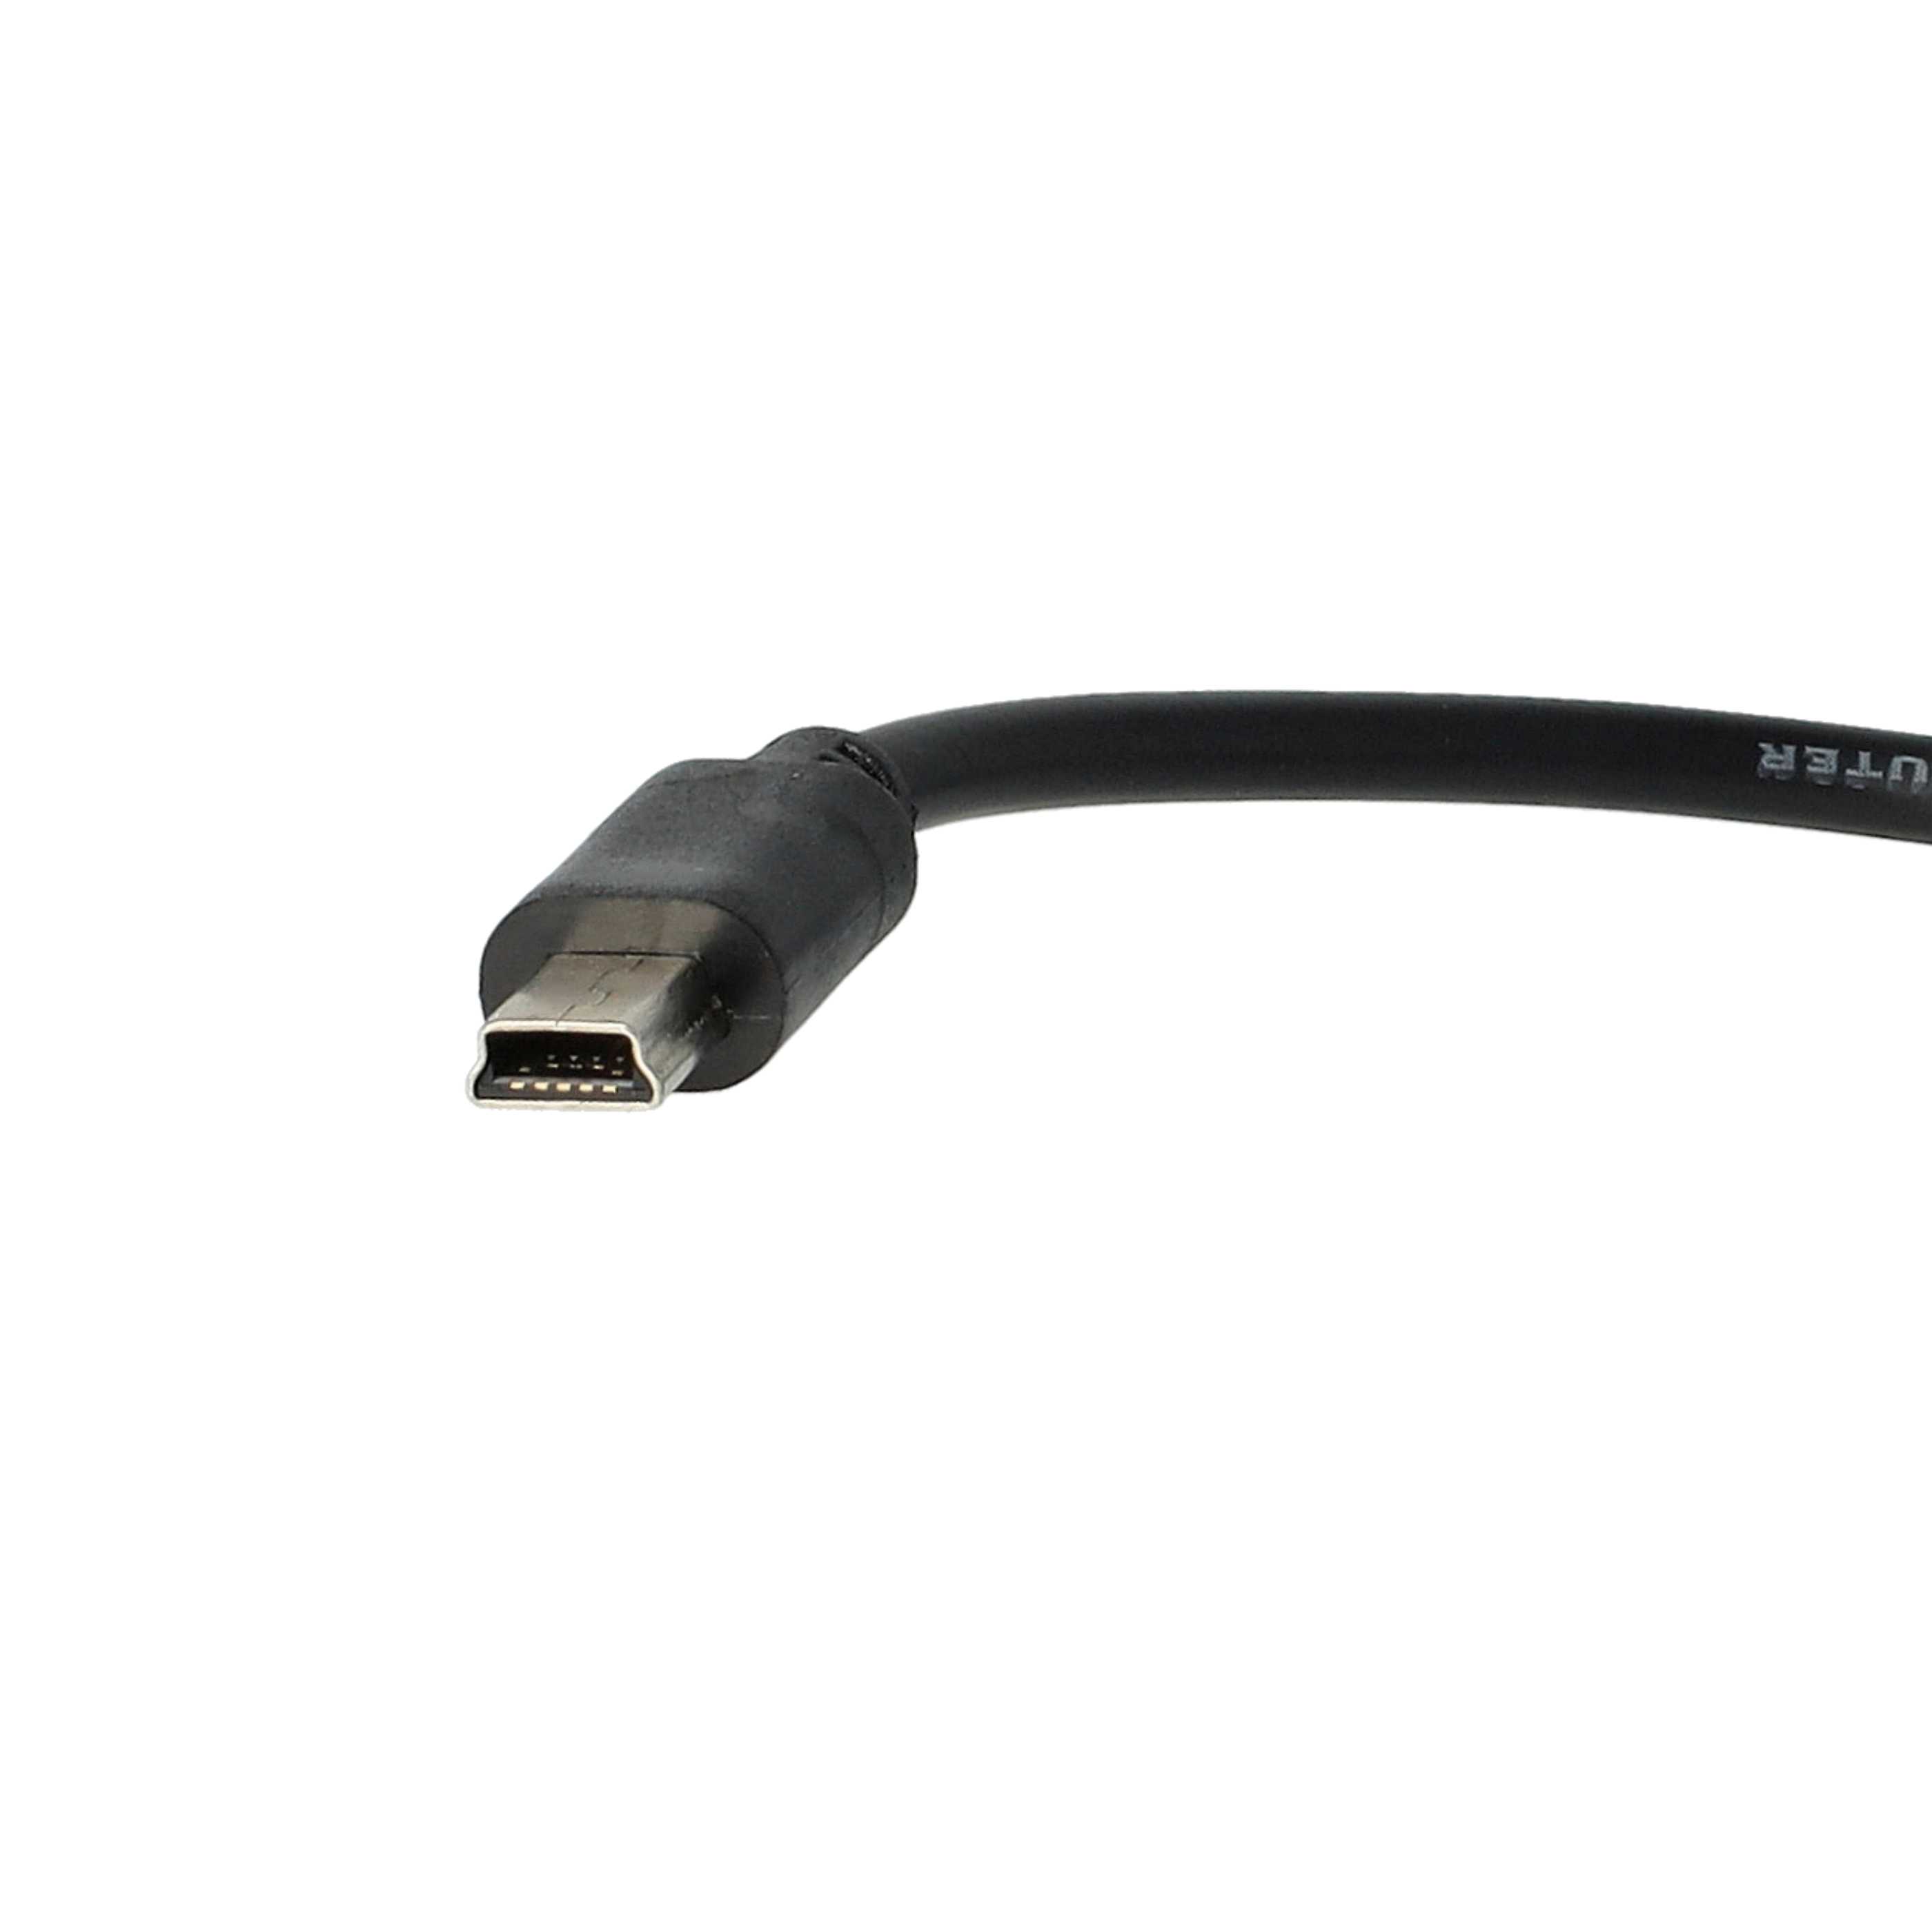 Adapter OTG mini-USB (male) to USB port (female) for smartphone, tablet, netbook, laptop